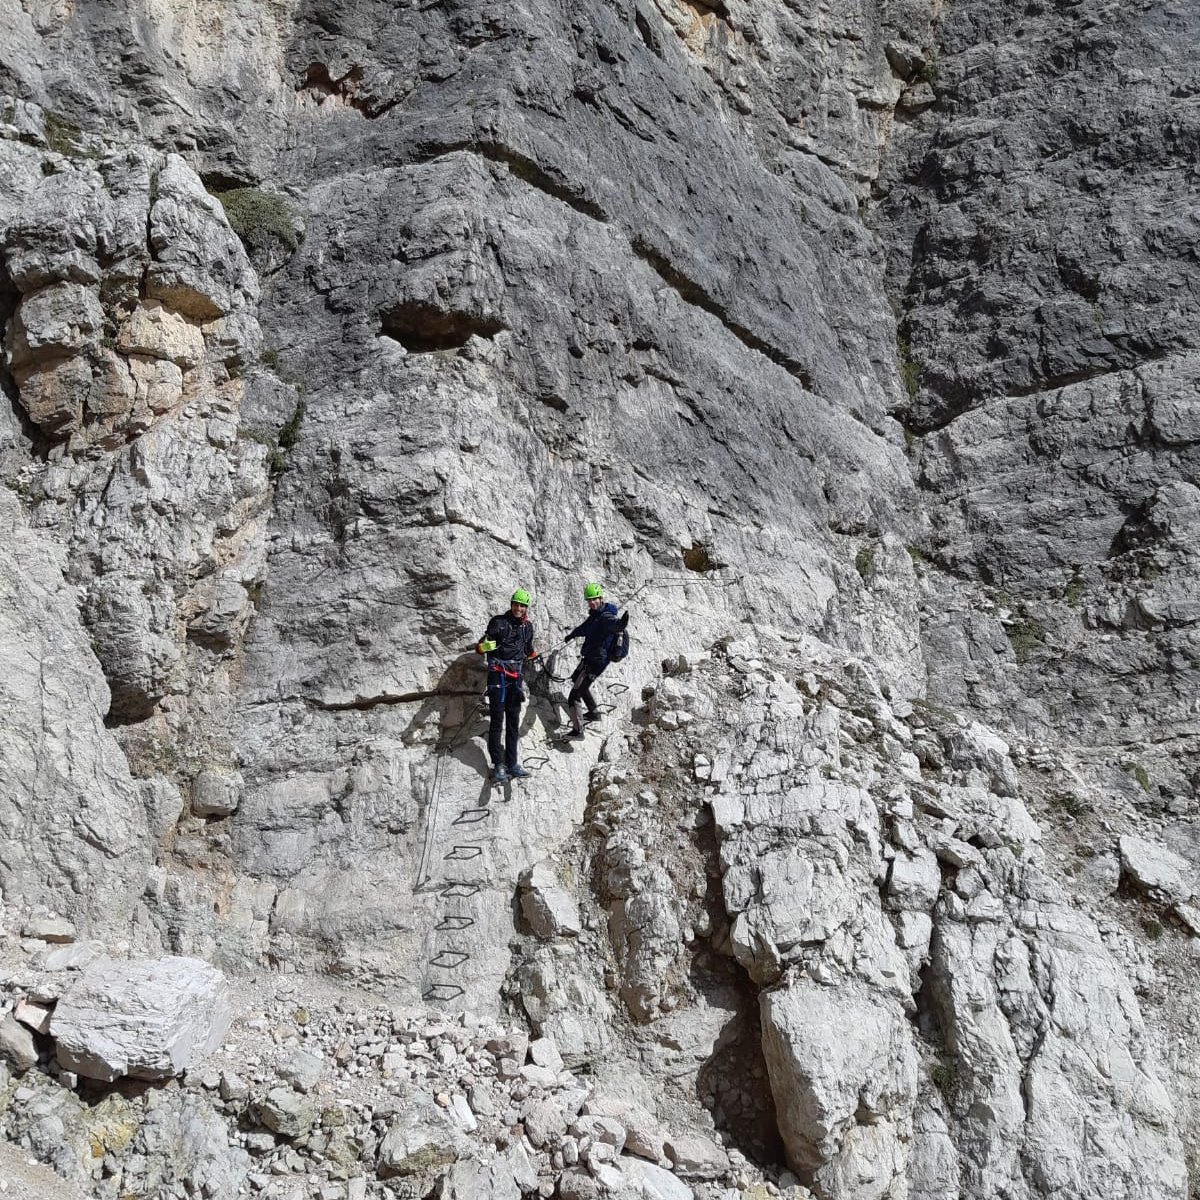 🧗‍♀️ Seeking an adrenaline-fueled adventure? Check out my latest blog post on Ferrata Rapegna, an exhilarating via ferrata route t! 🏔️⛰️ Let's conquer mountains together! 🌟#Dolomiti #FerrataRapegna #AdventureAwaits #OutdoorEnthusiast #TravelBlog
wp.me/pex4bo-be